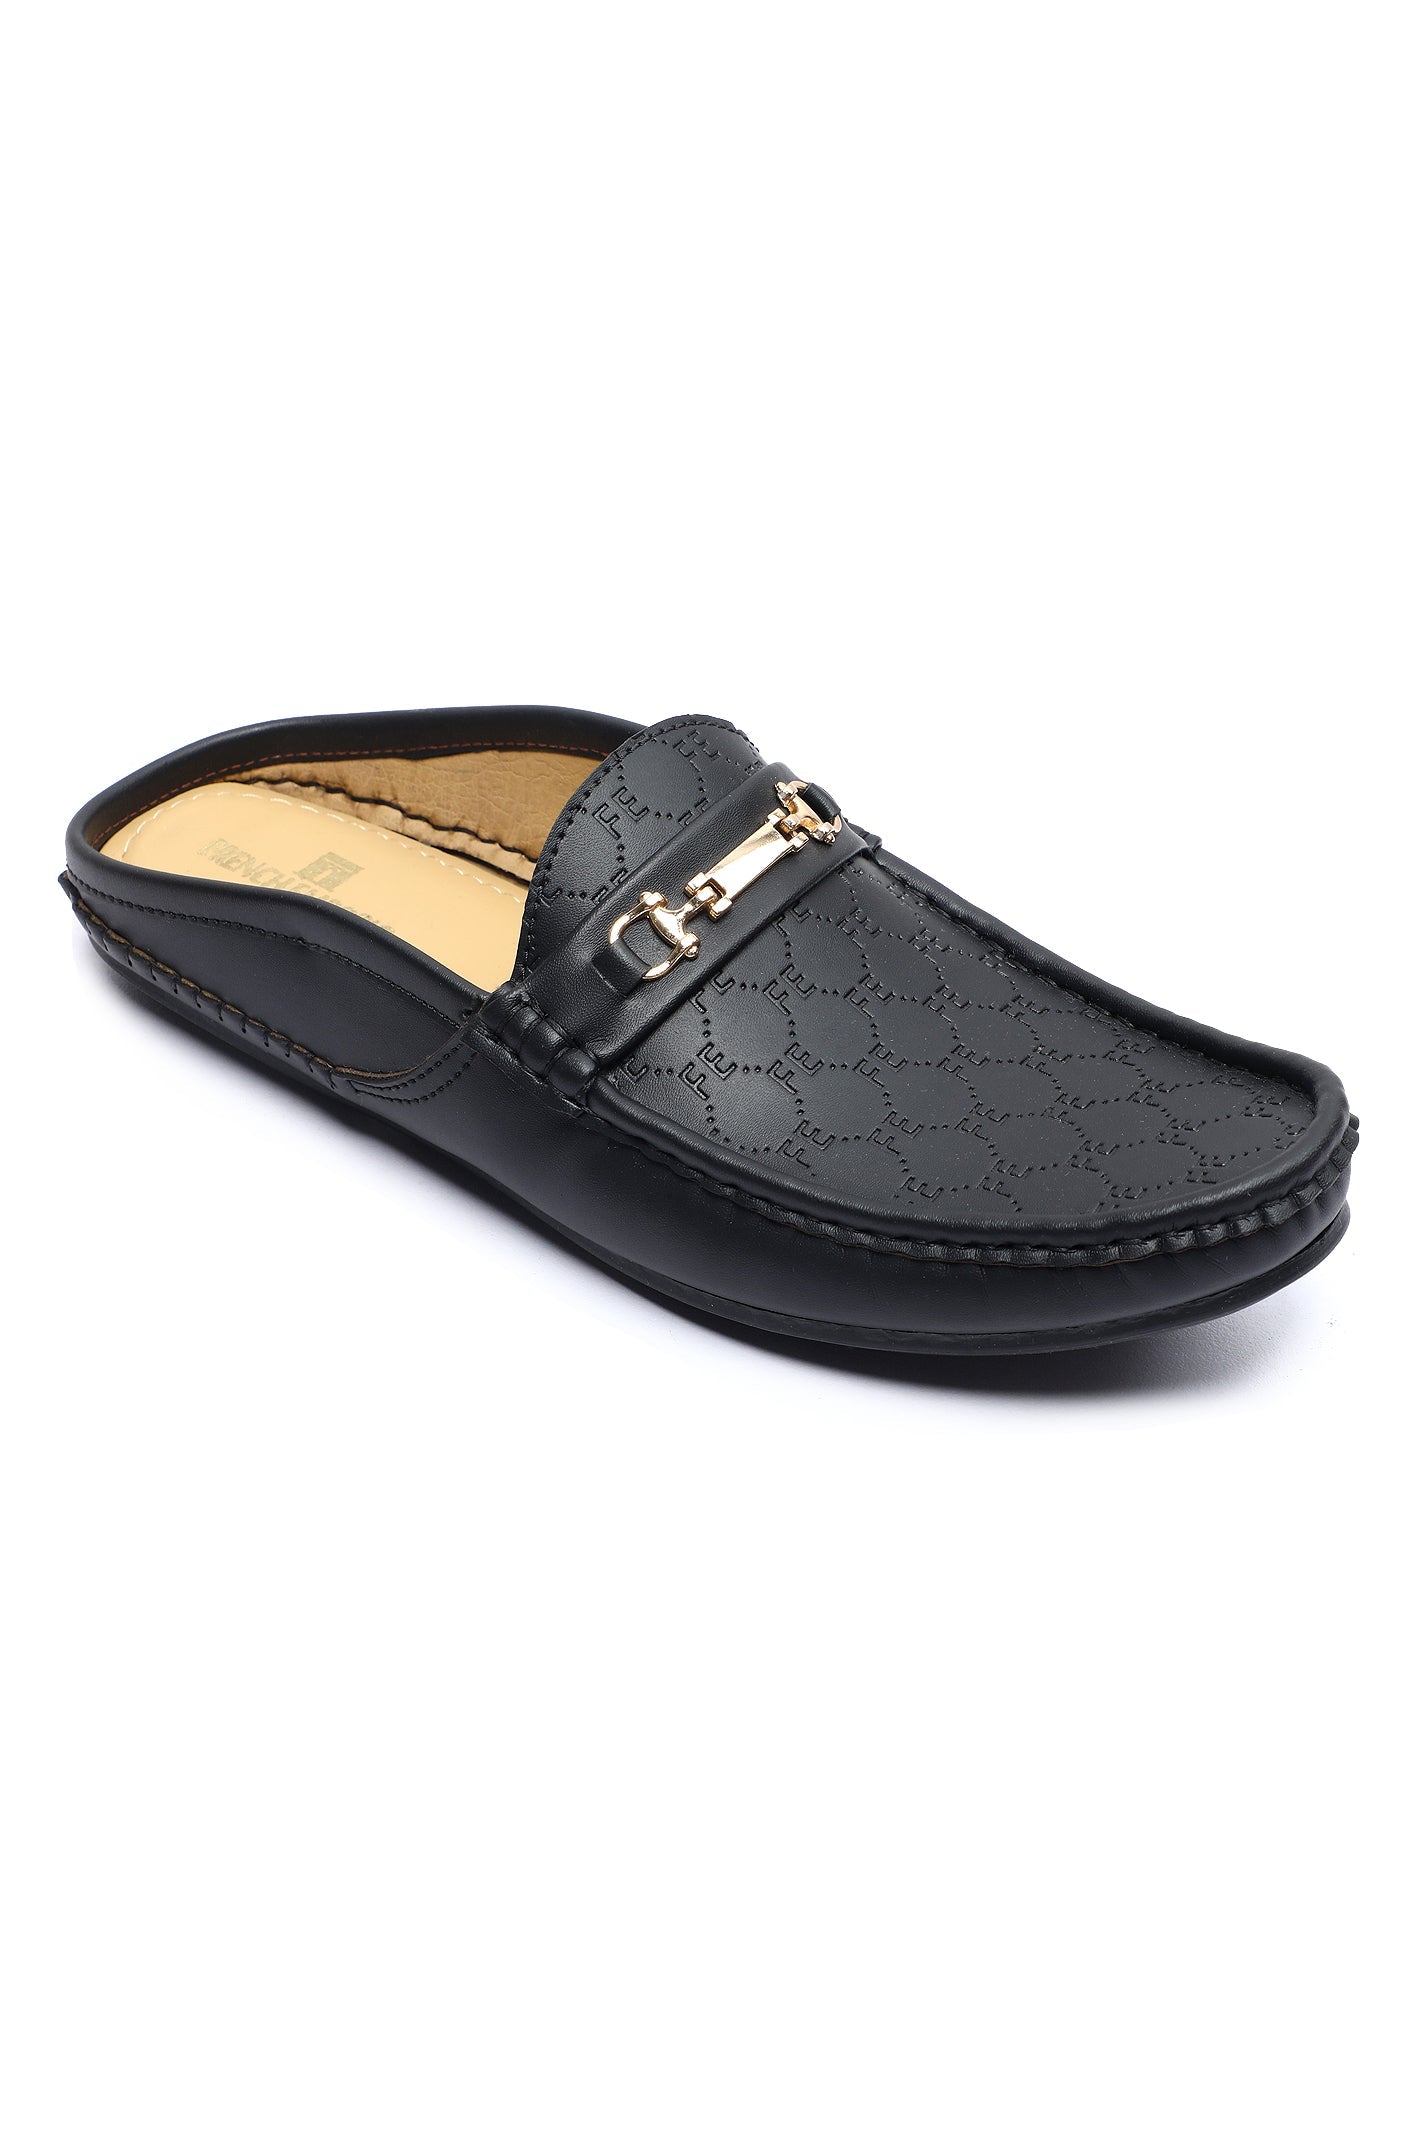 Casual Mule Shoes For Men SKU: SMC-0095-BLACK - Diners